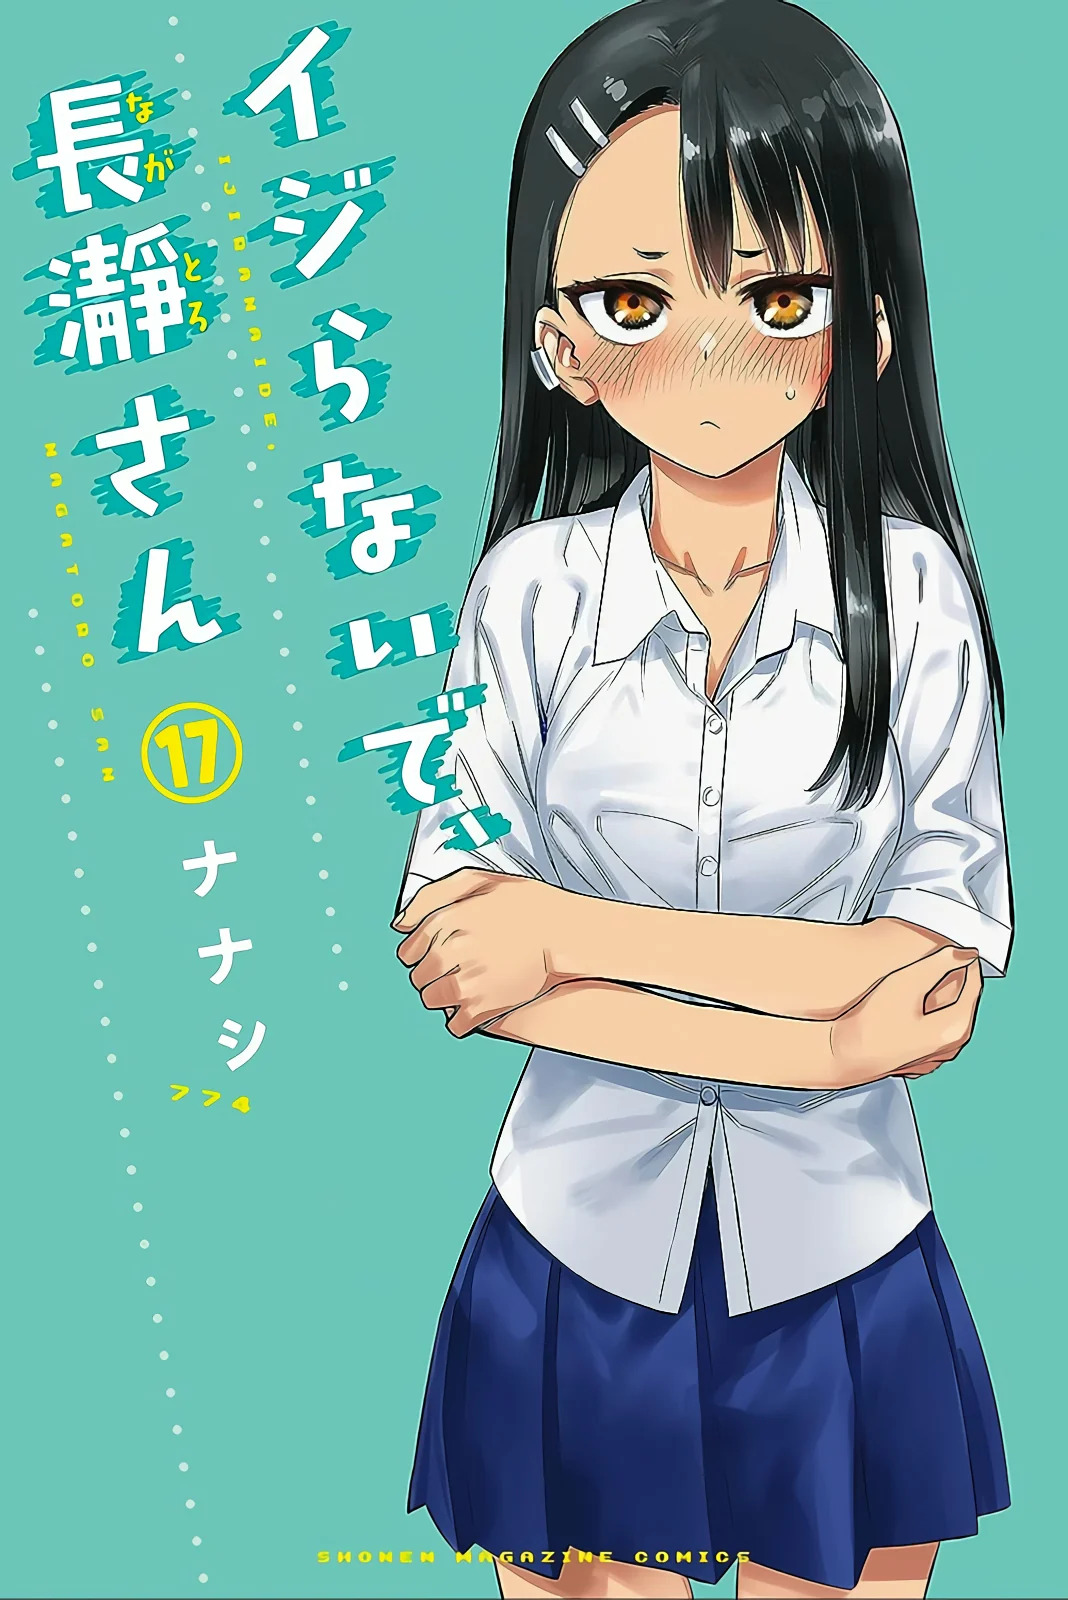 Read Ijiranaide, Nagatoro-san Manga Chapter 1 in English Free Online